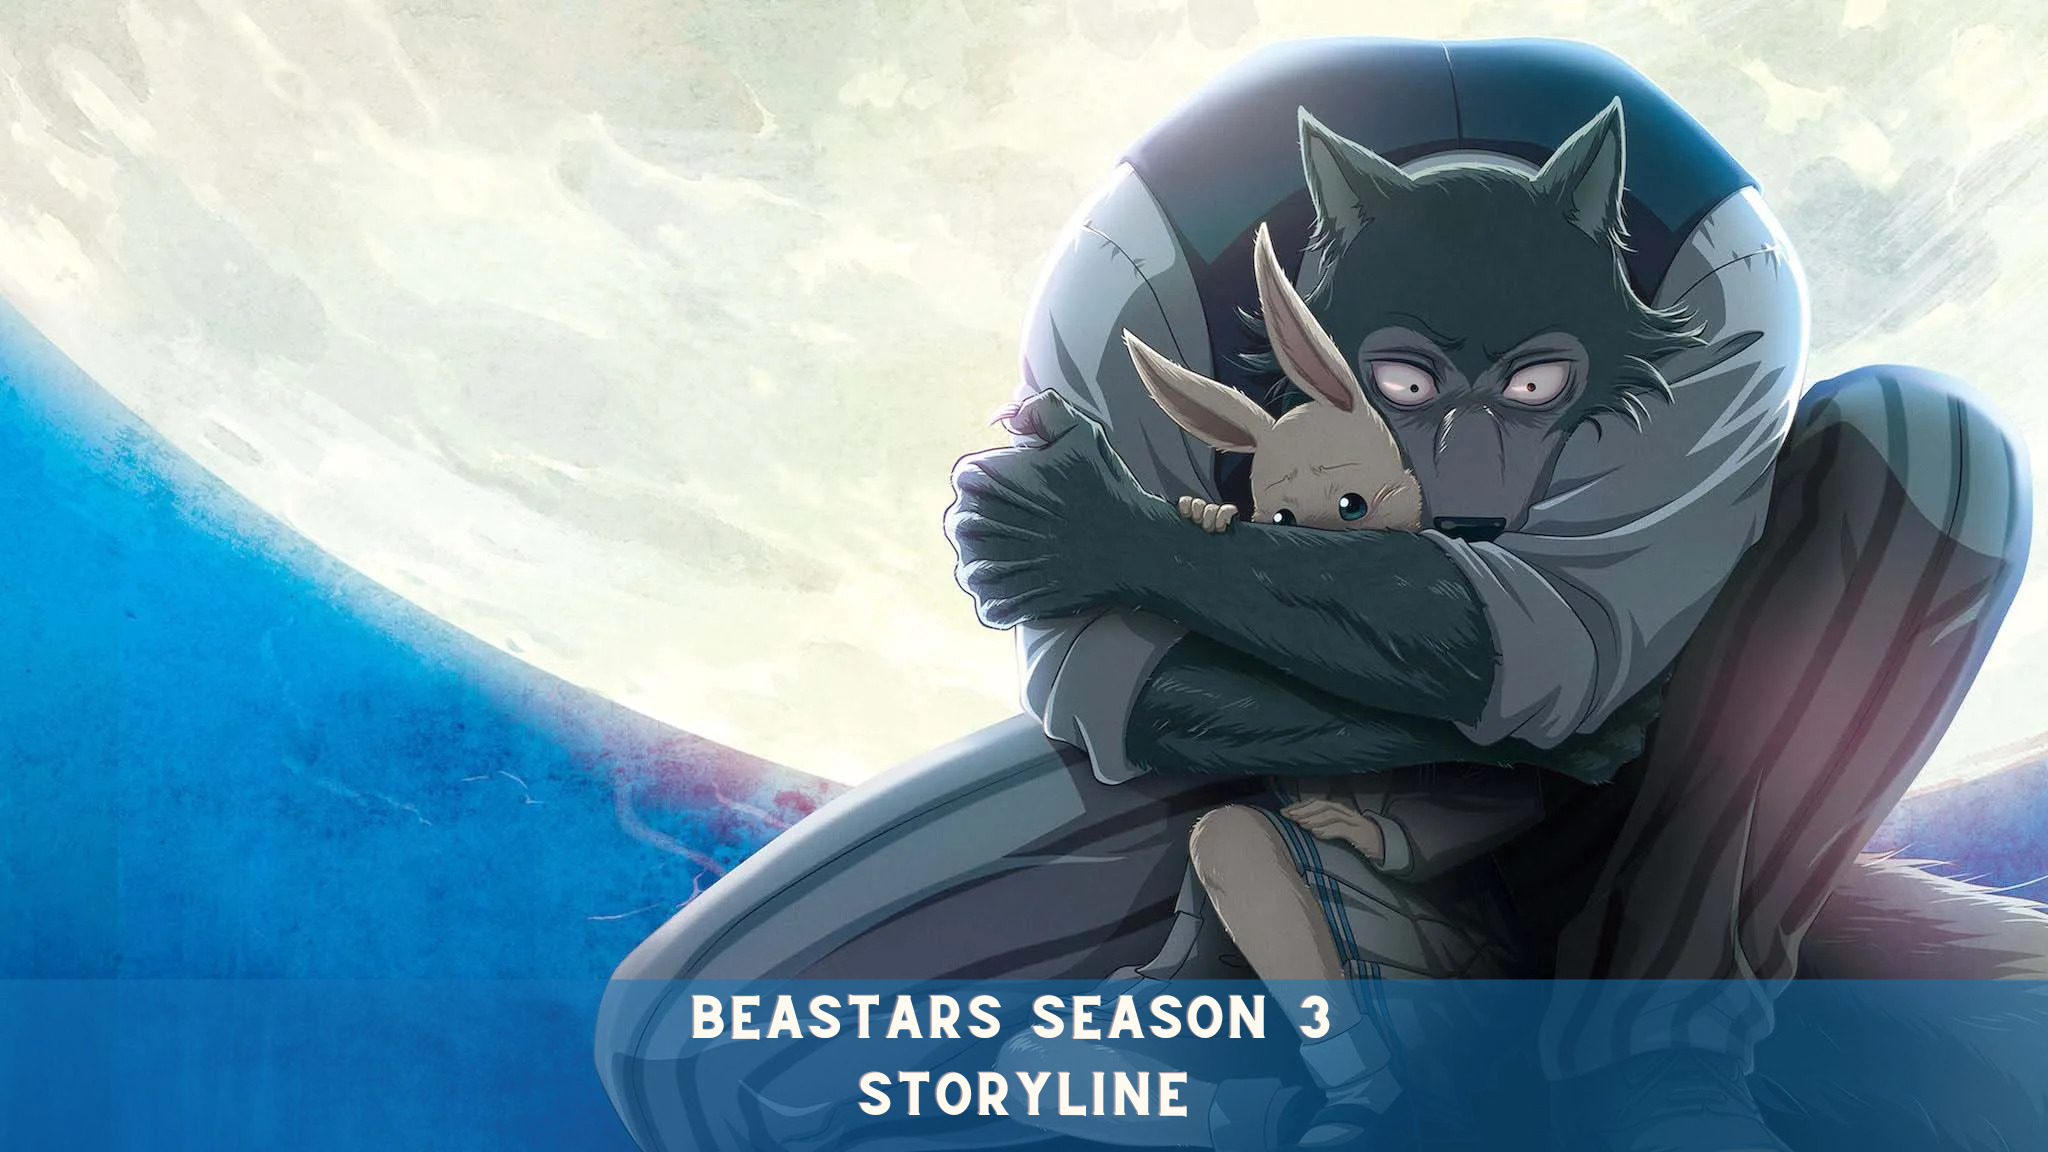 Beastars Season 3 Storyline